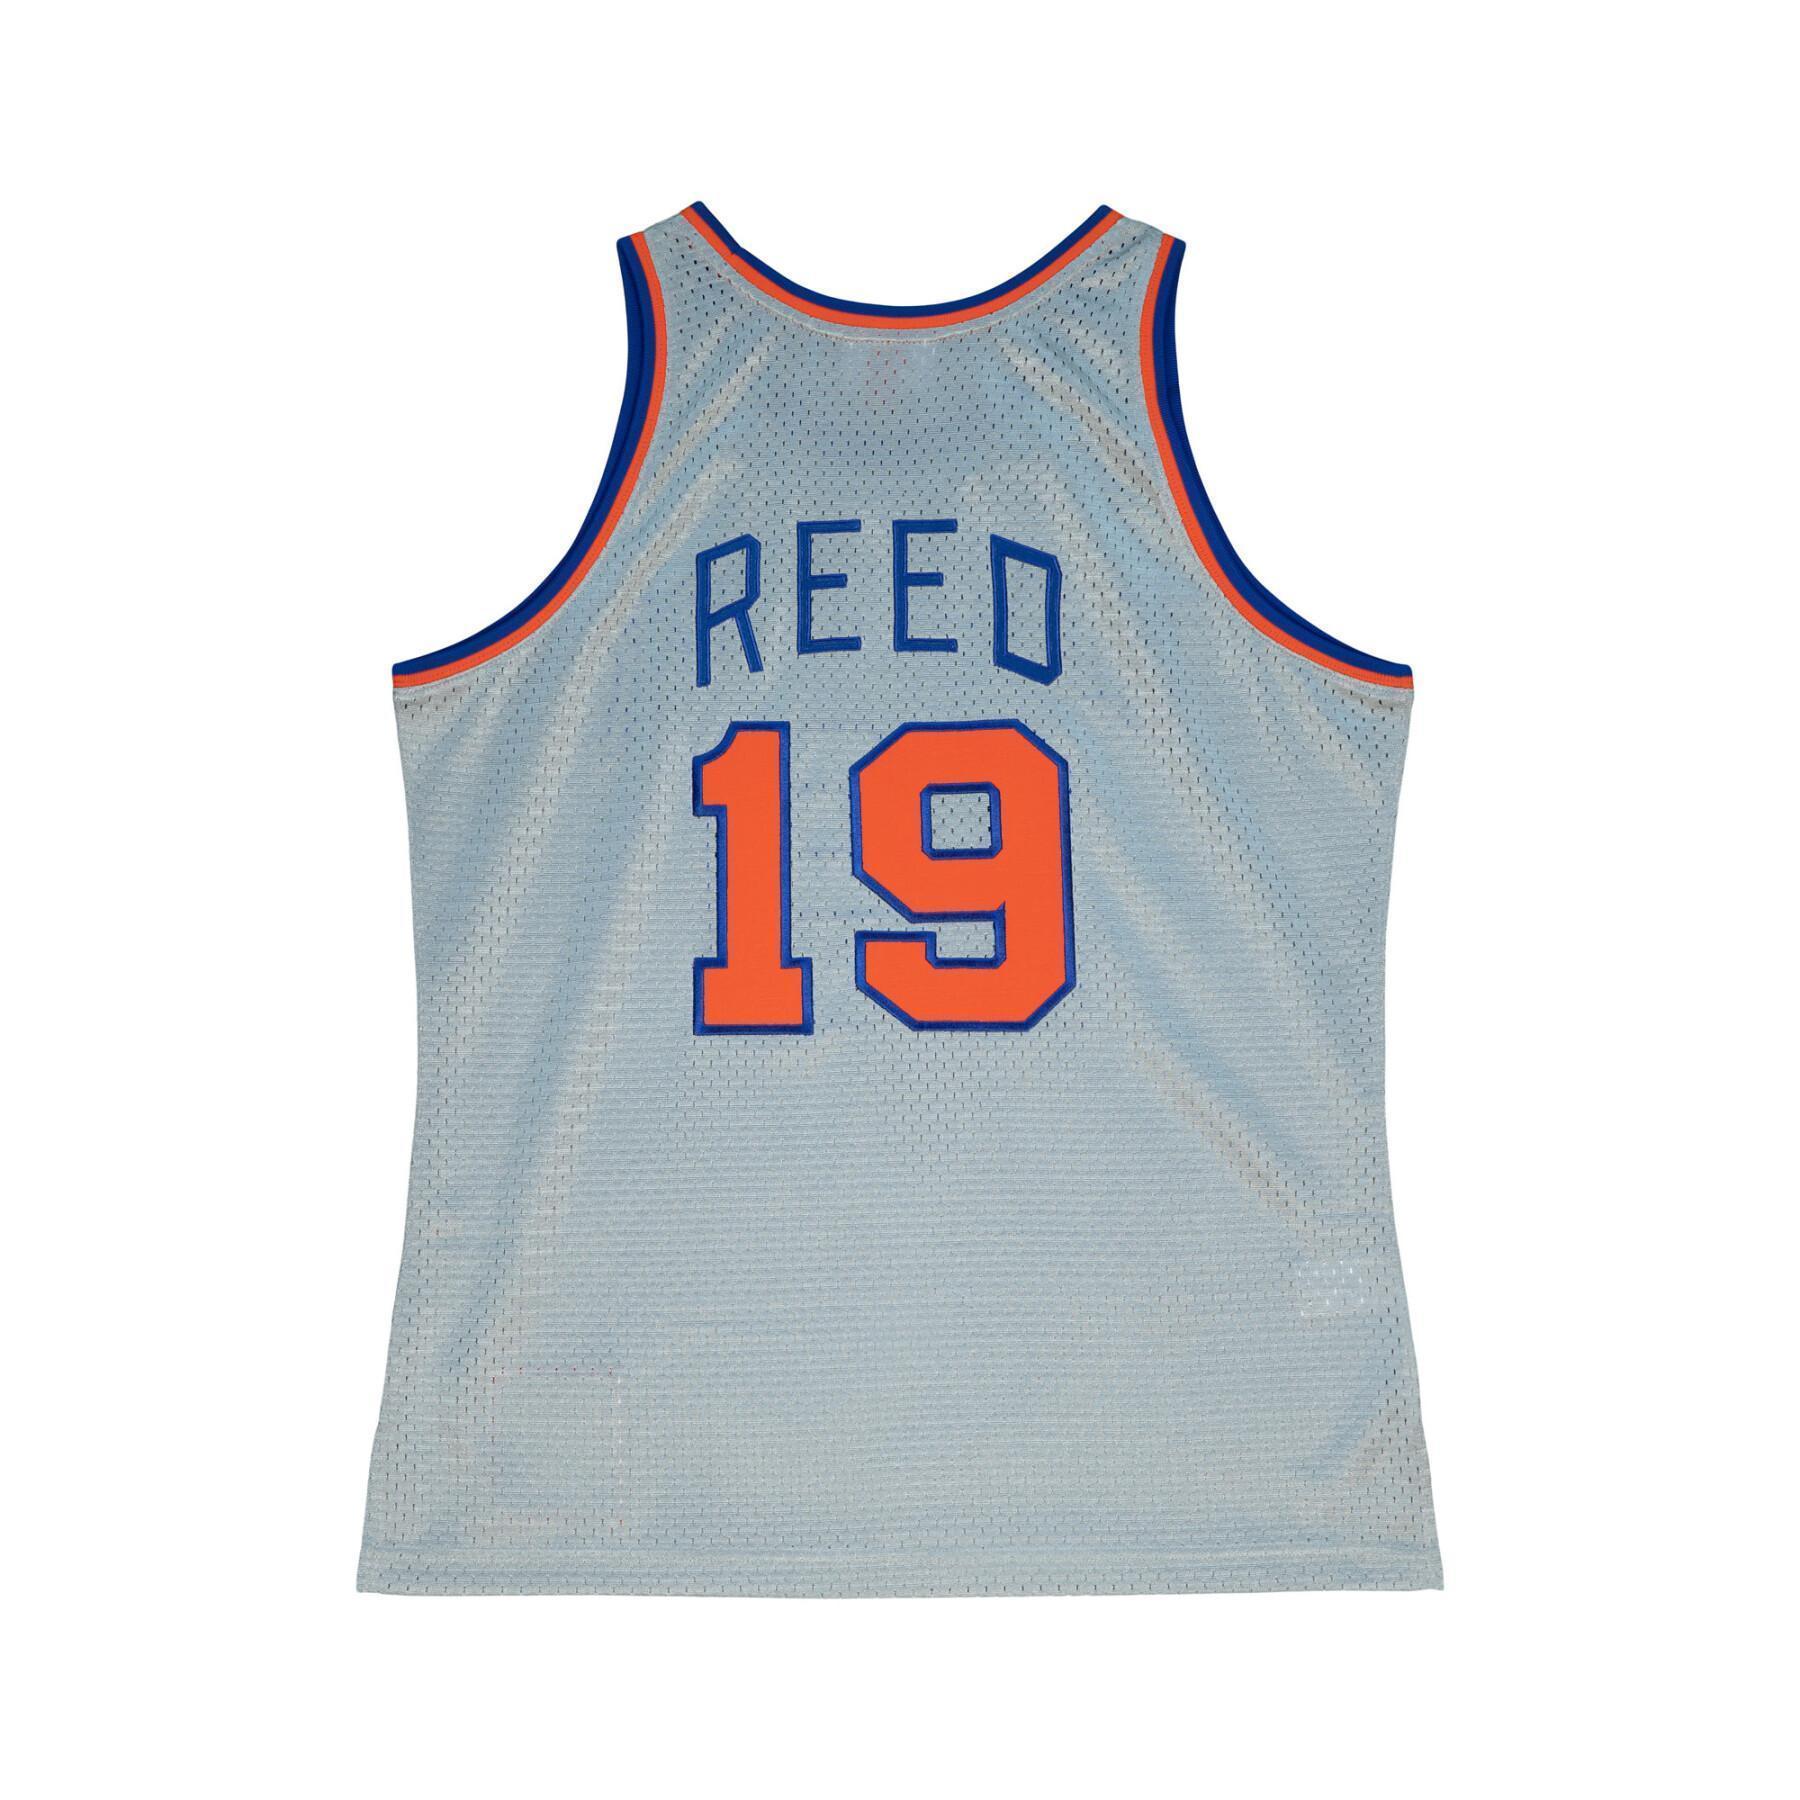 CamisetaNew York Knicks 75th NBA 1969